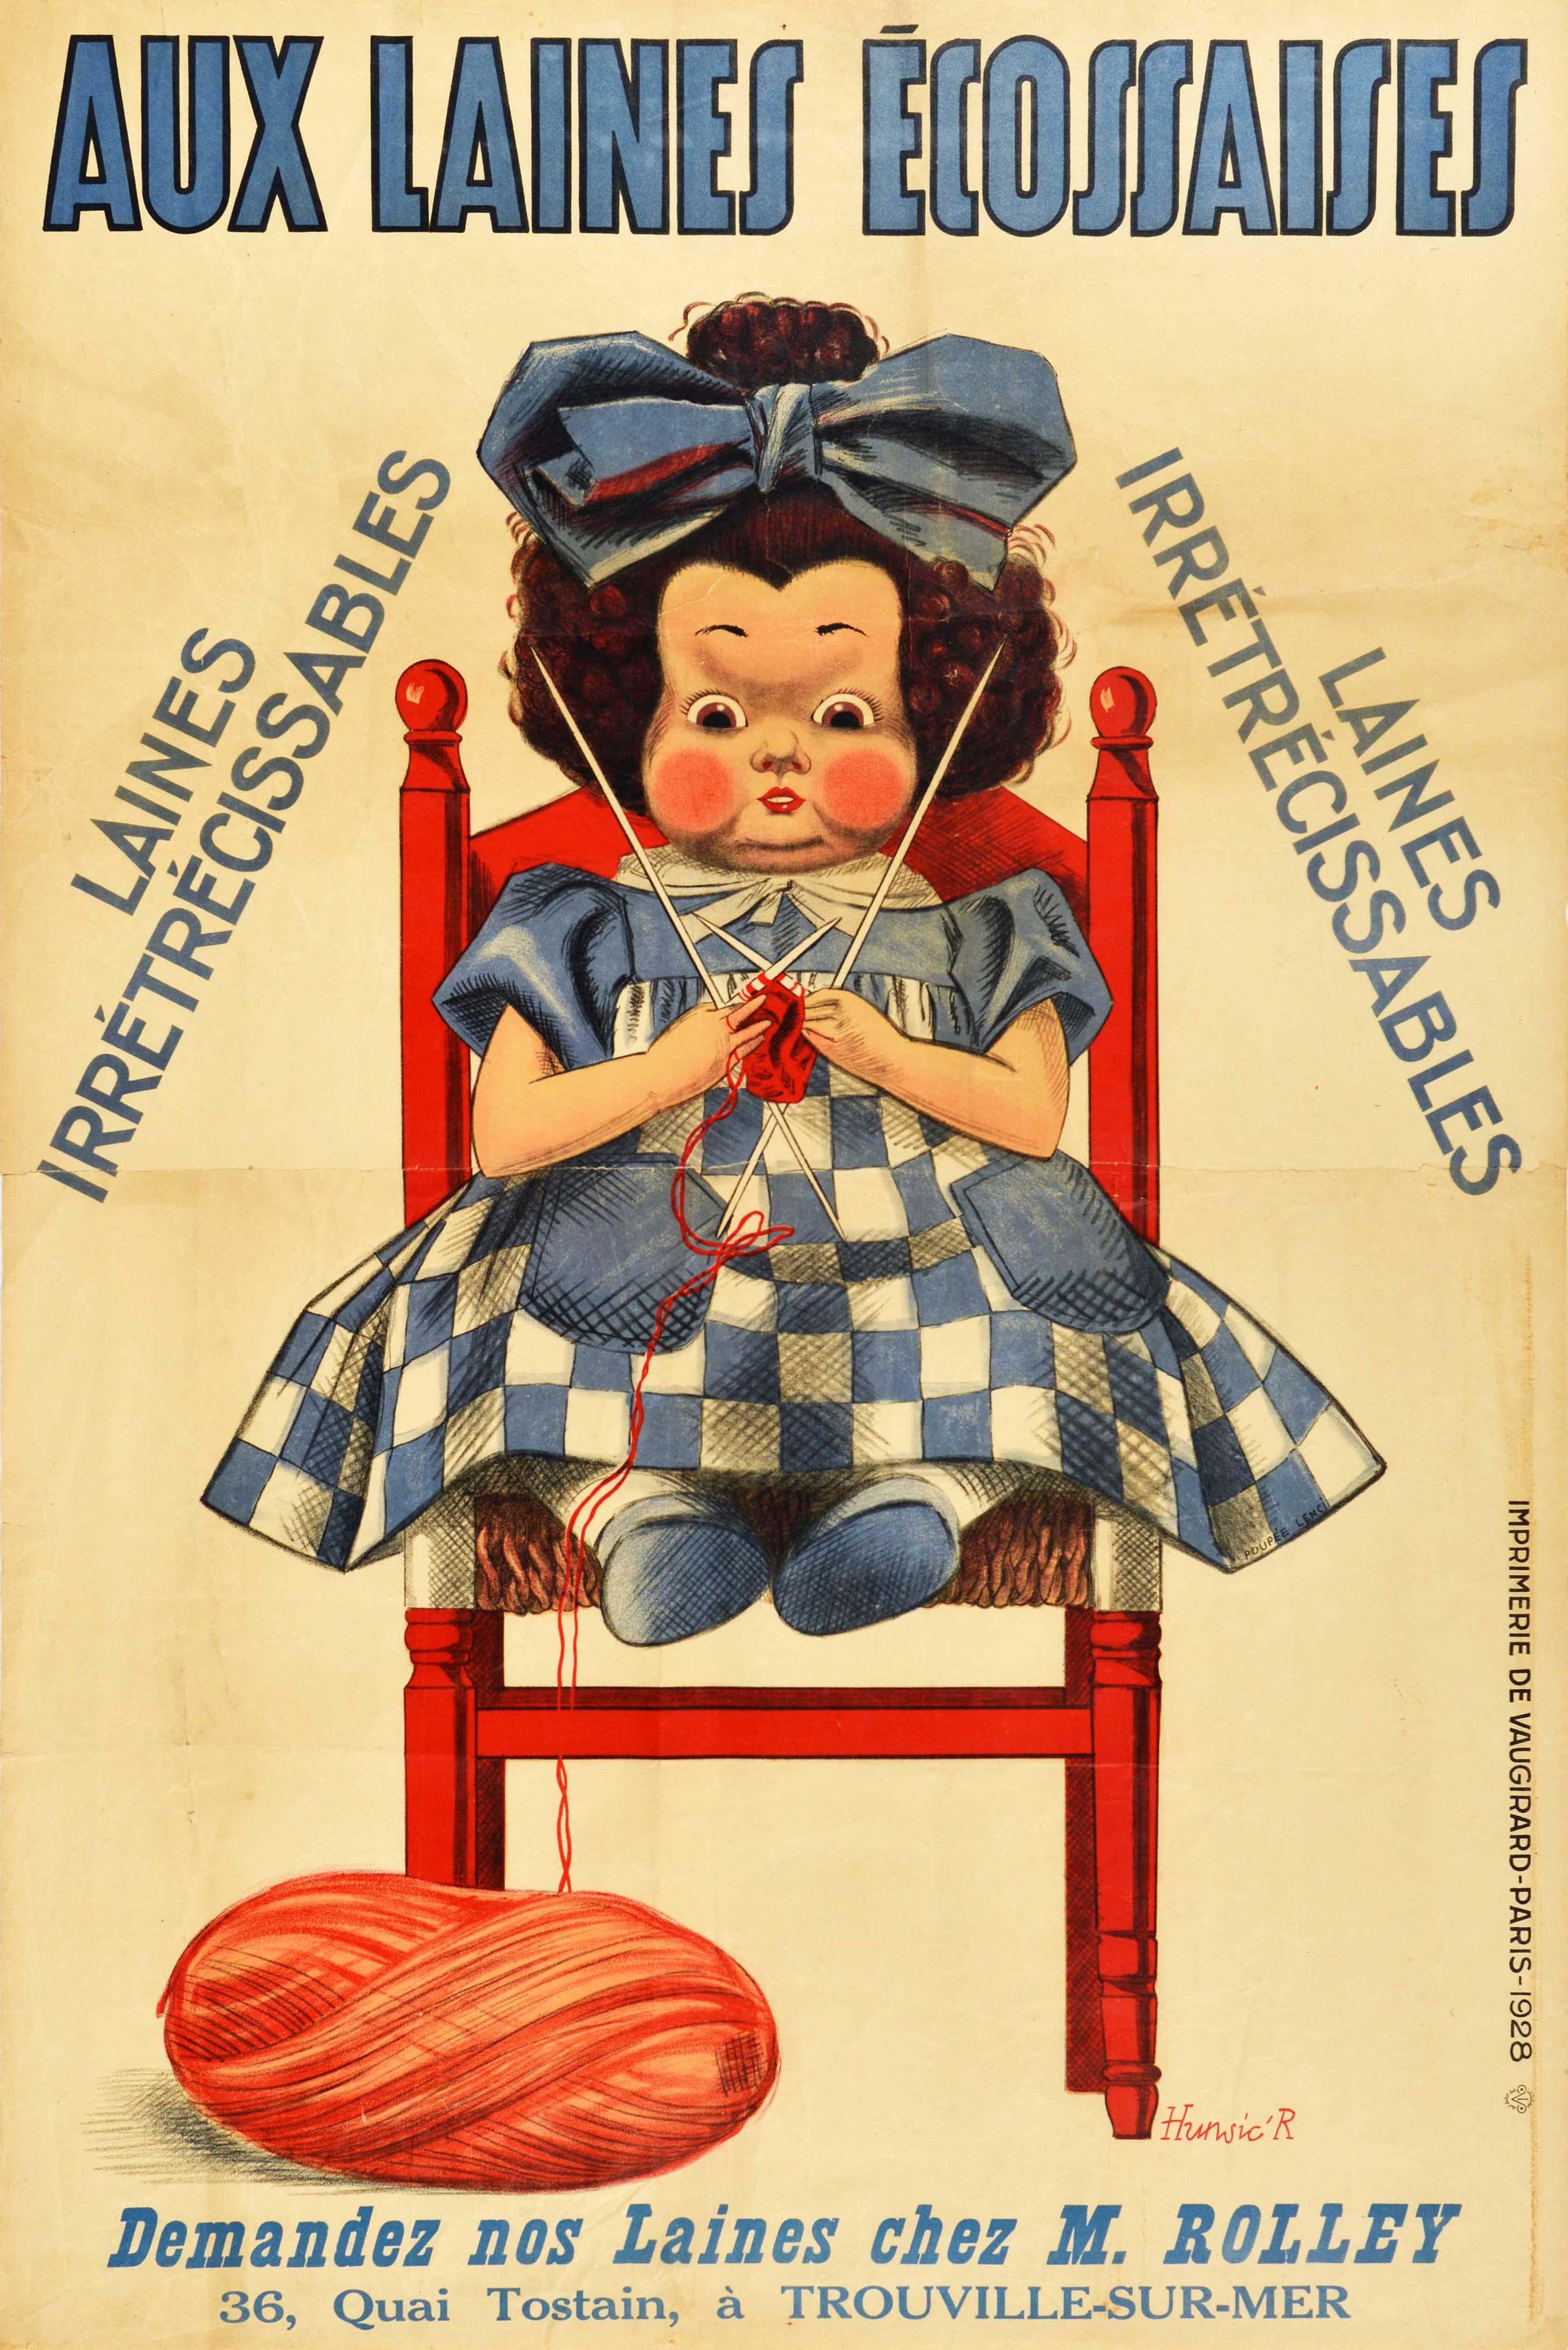 R. Hurwic Print - Original Vintage Poster Advertising Shrink Resistant Scottish Wool Knitting Doll